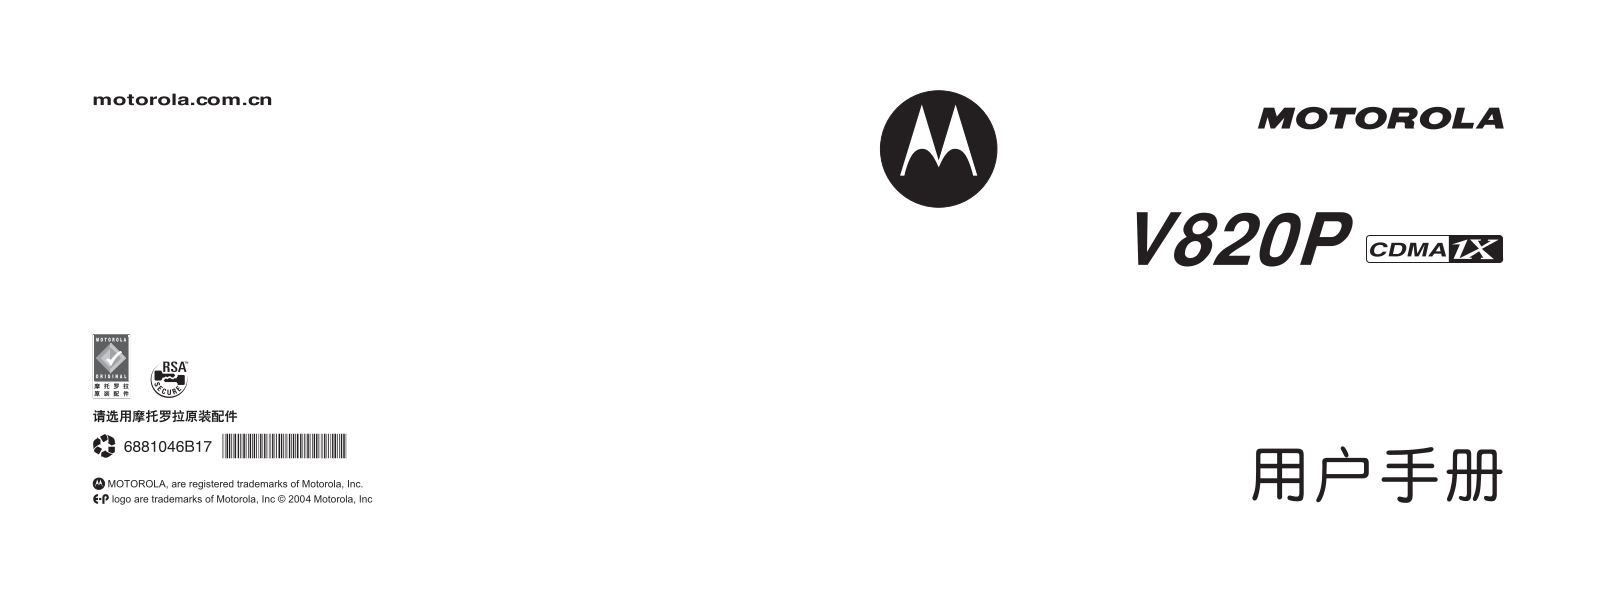 Motorola V820p Owner's Manual